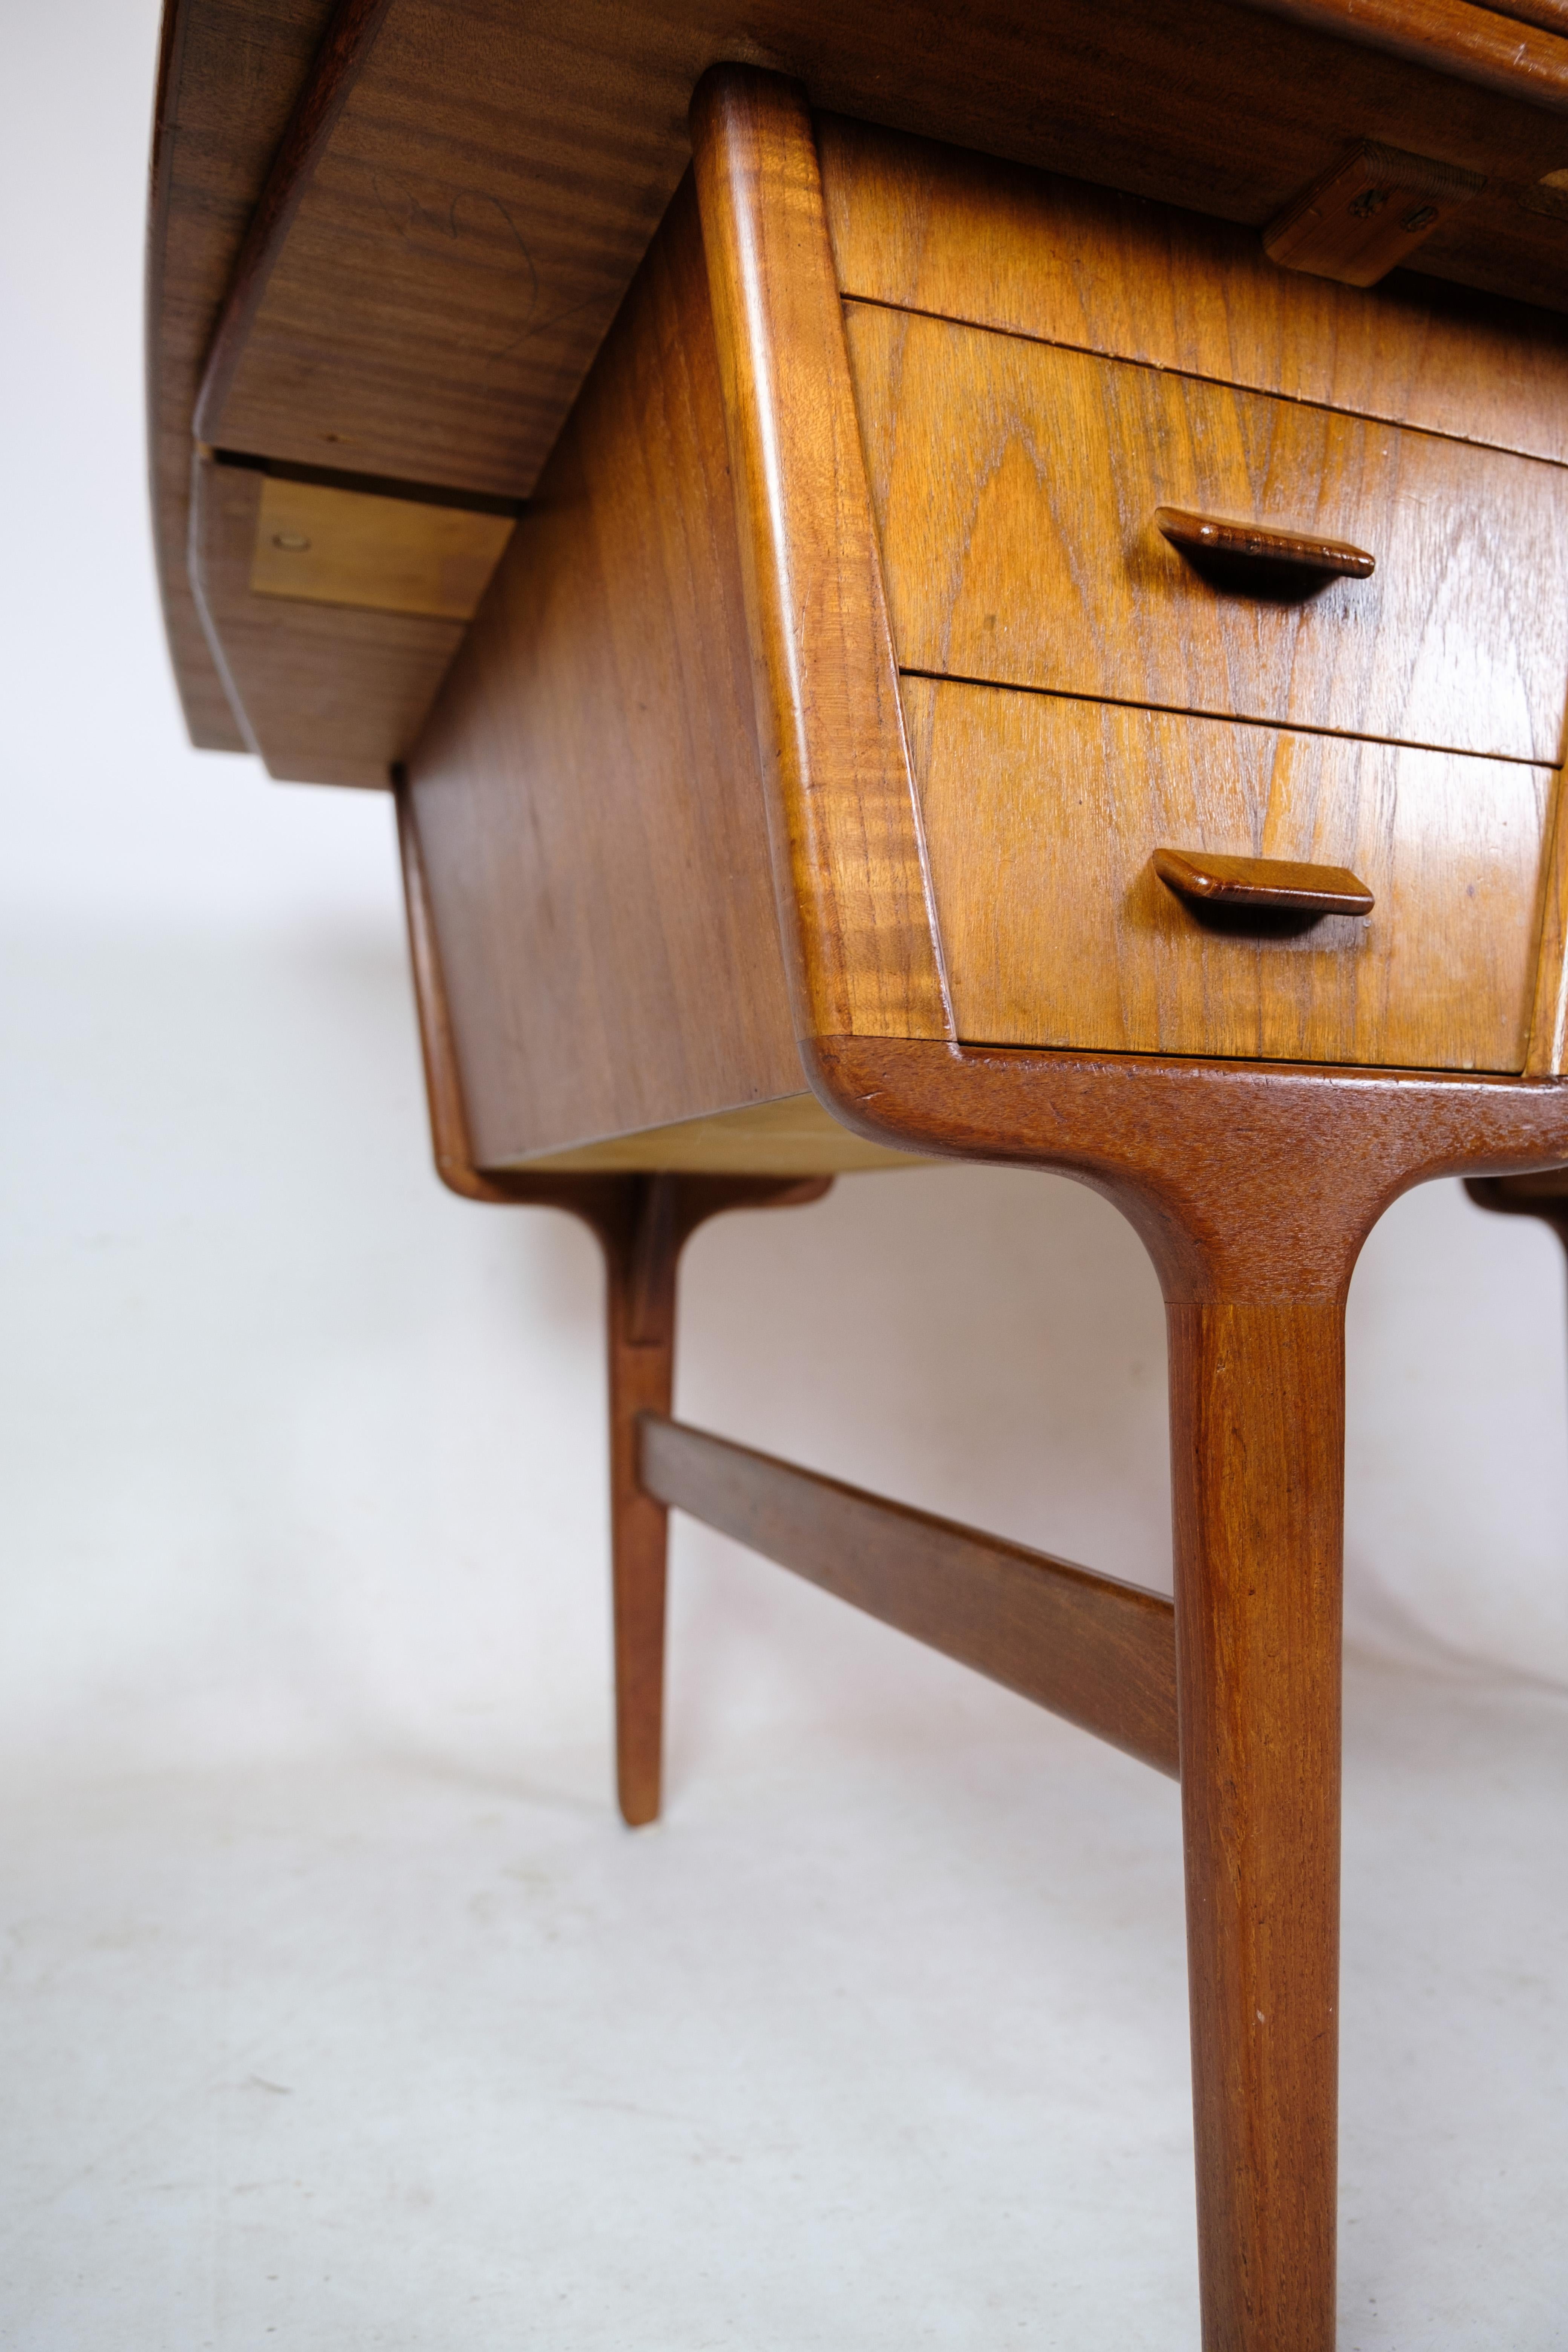 Scandinavian Modern Desk / Dining Table in Teak Wood of Finnish Design from the 1960's